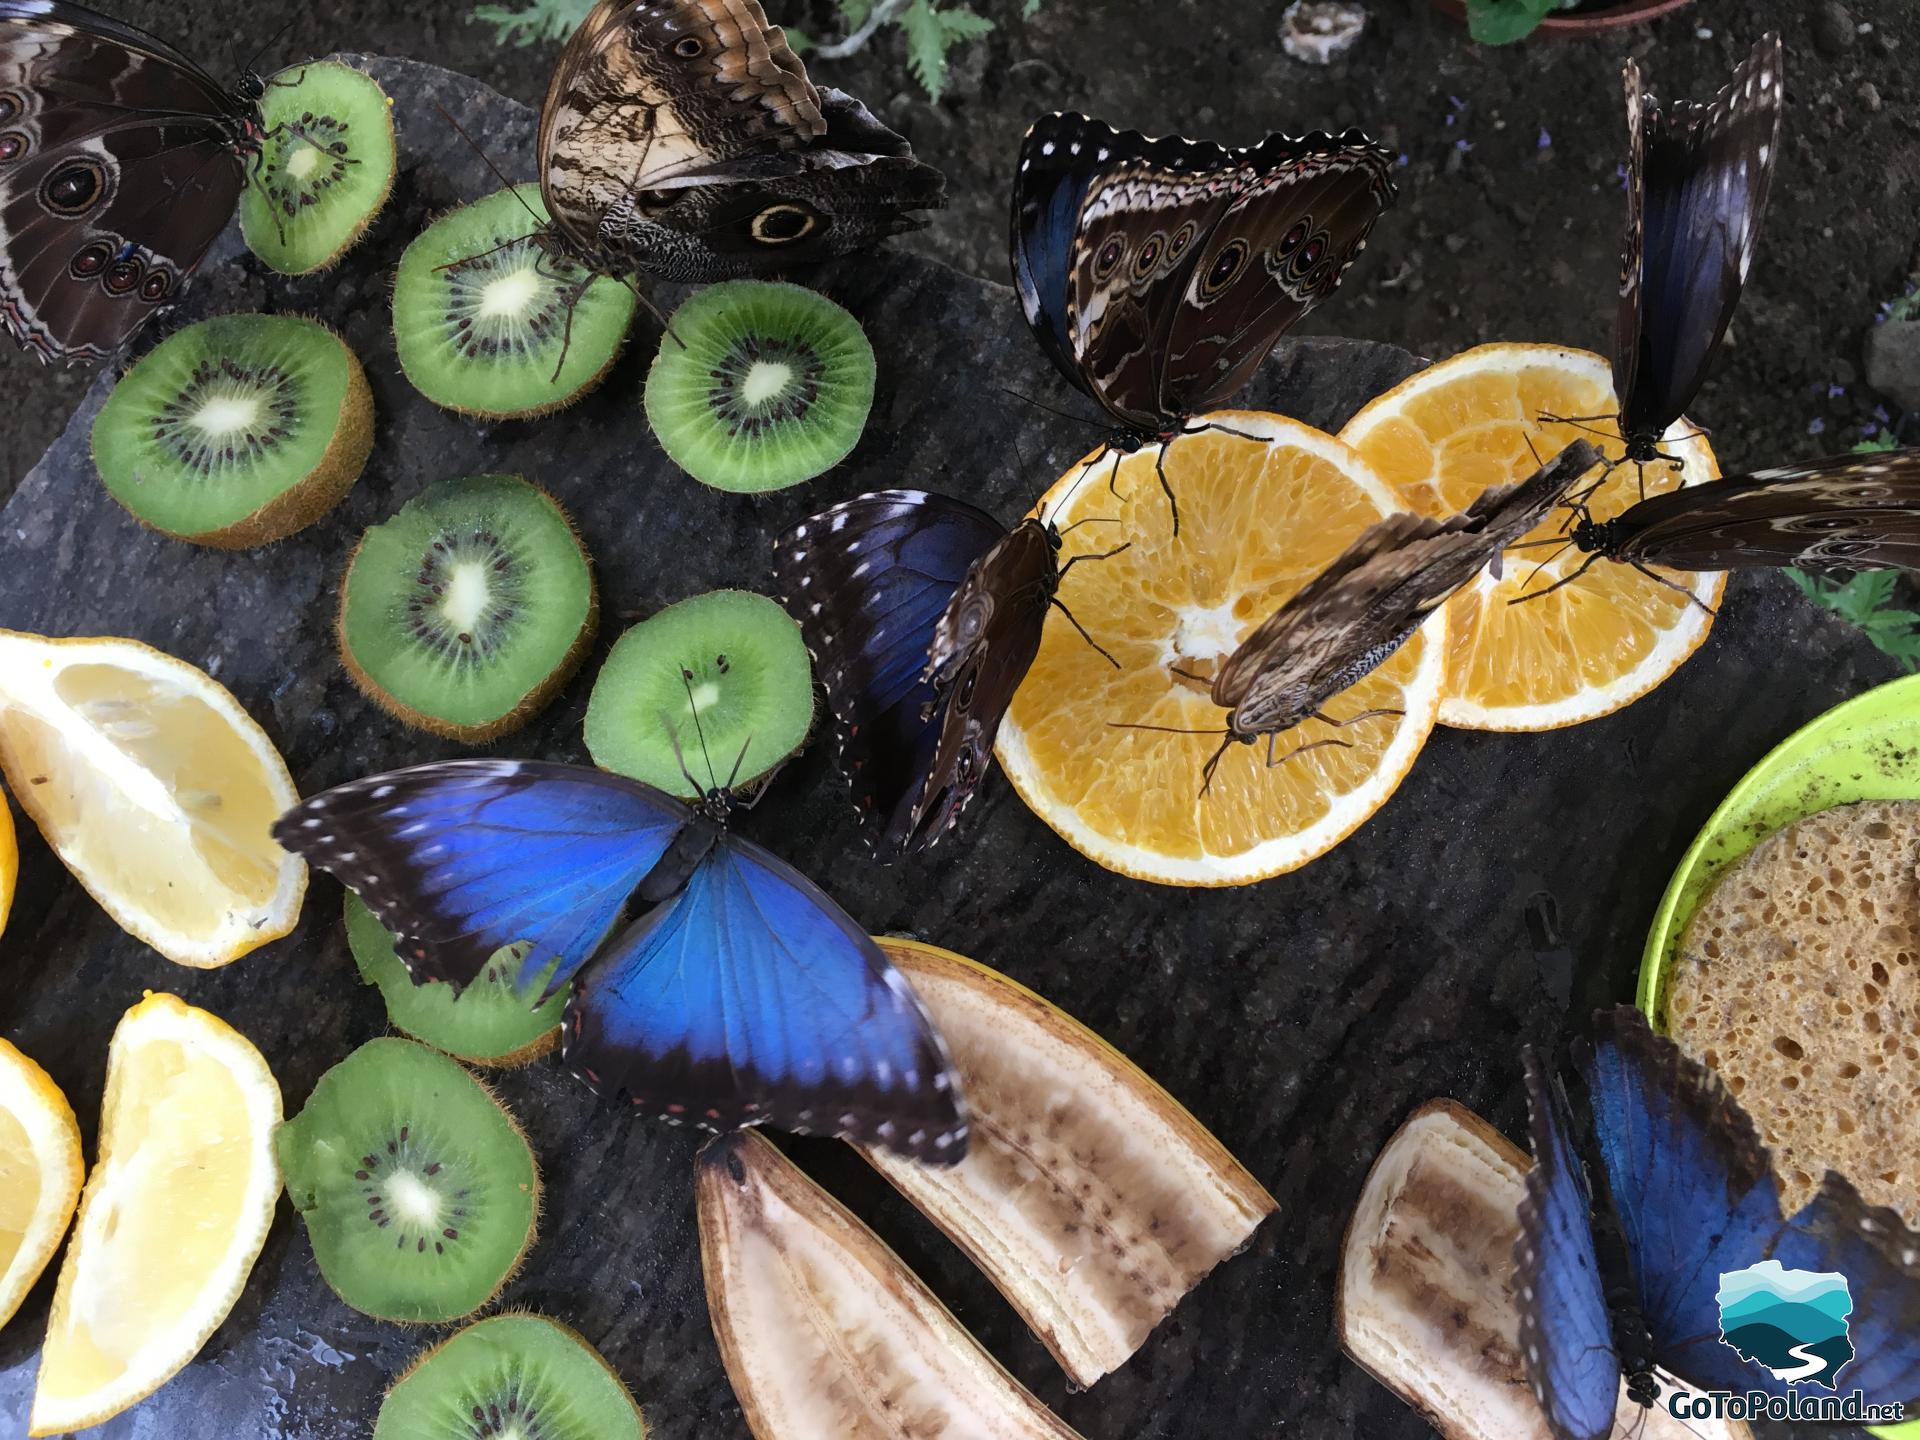 butterflies sitting on fruits